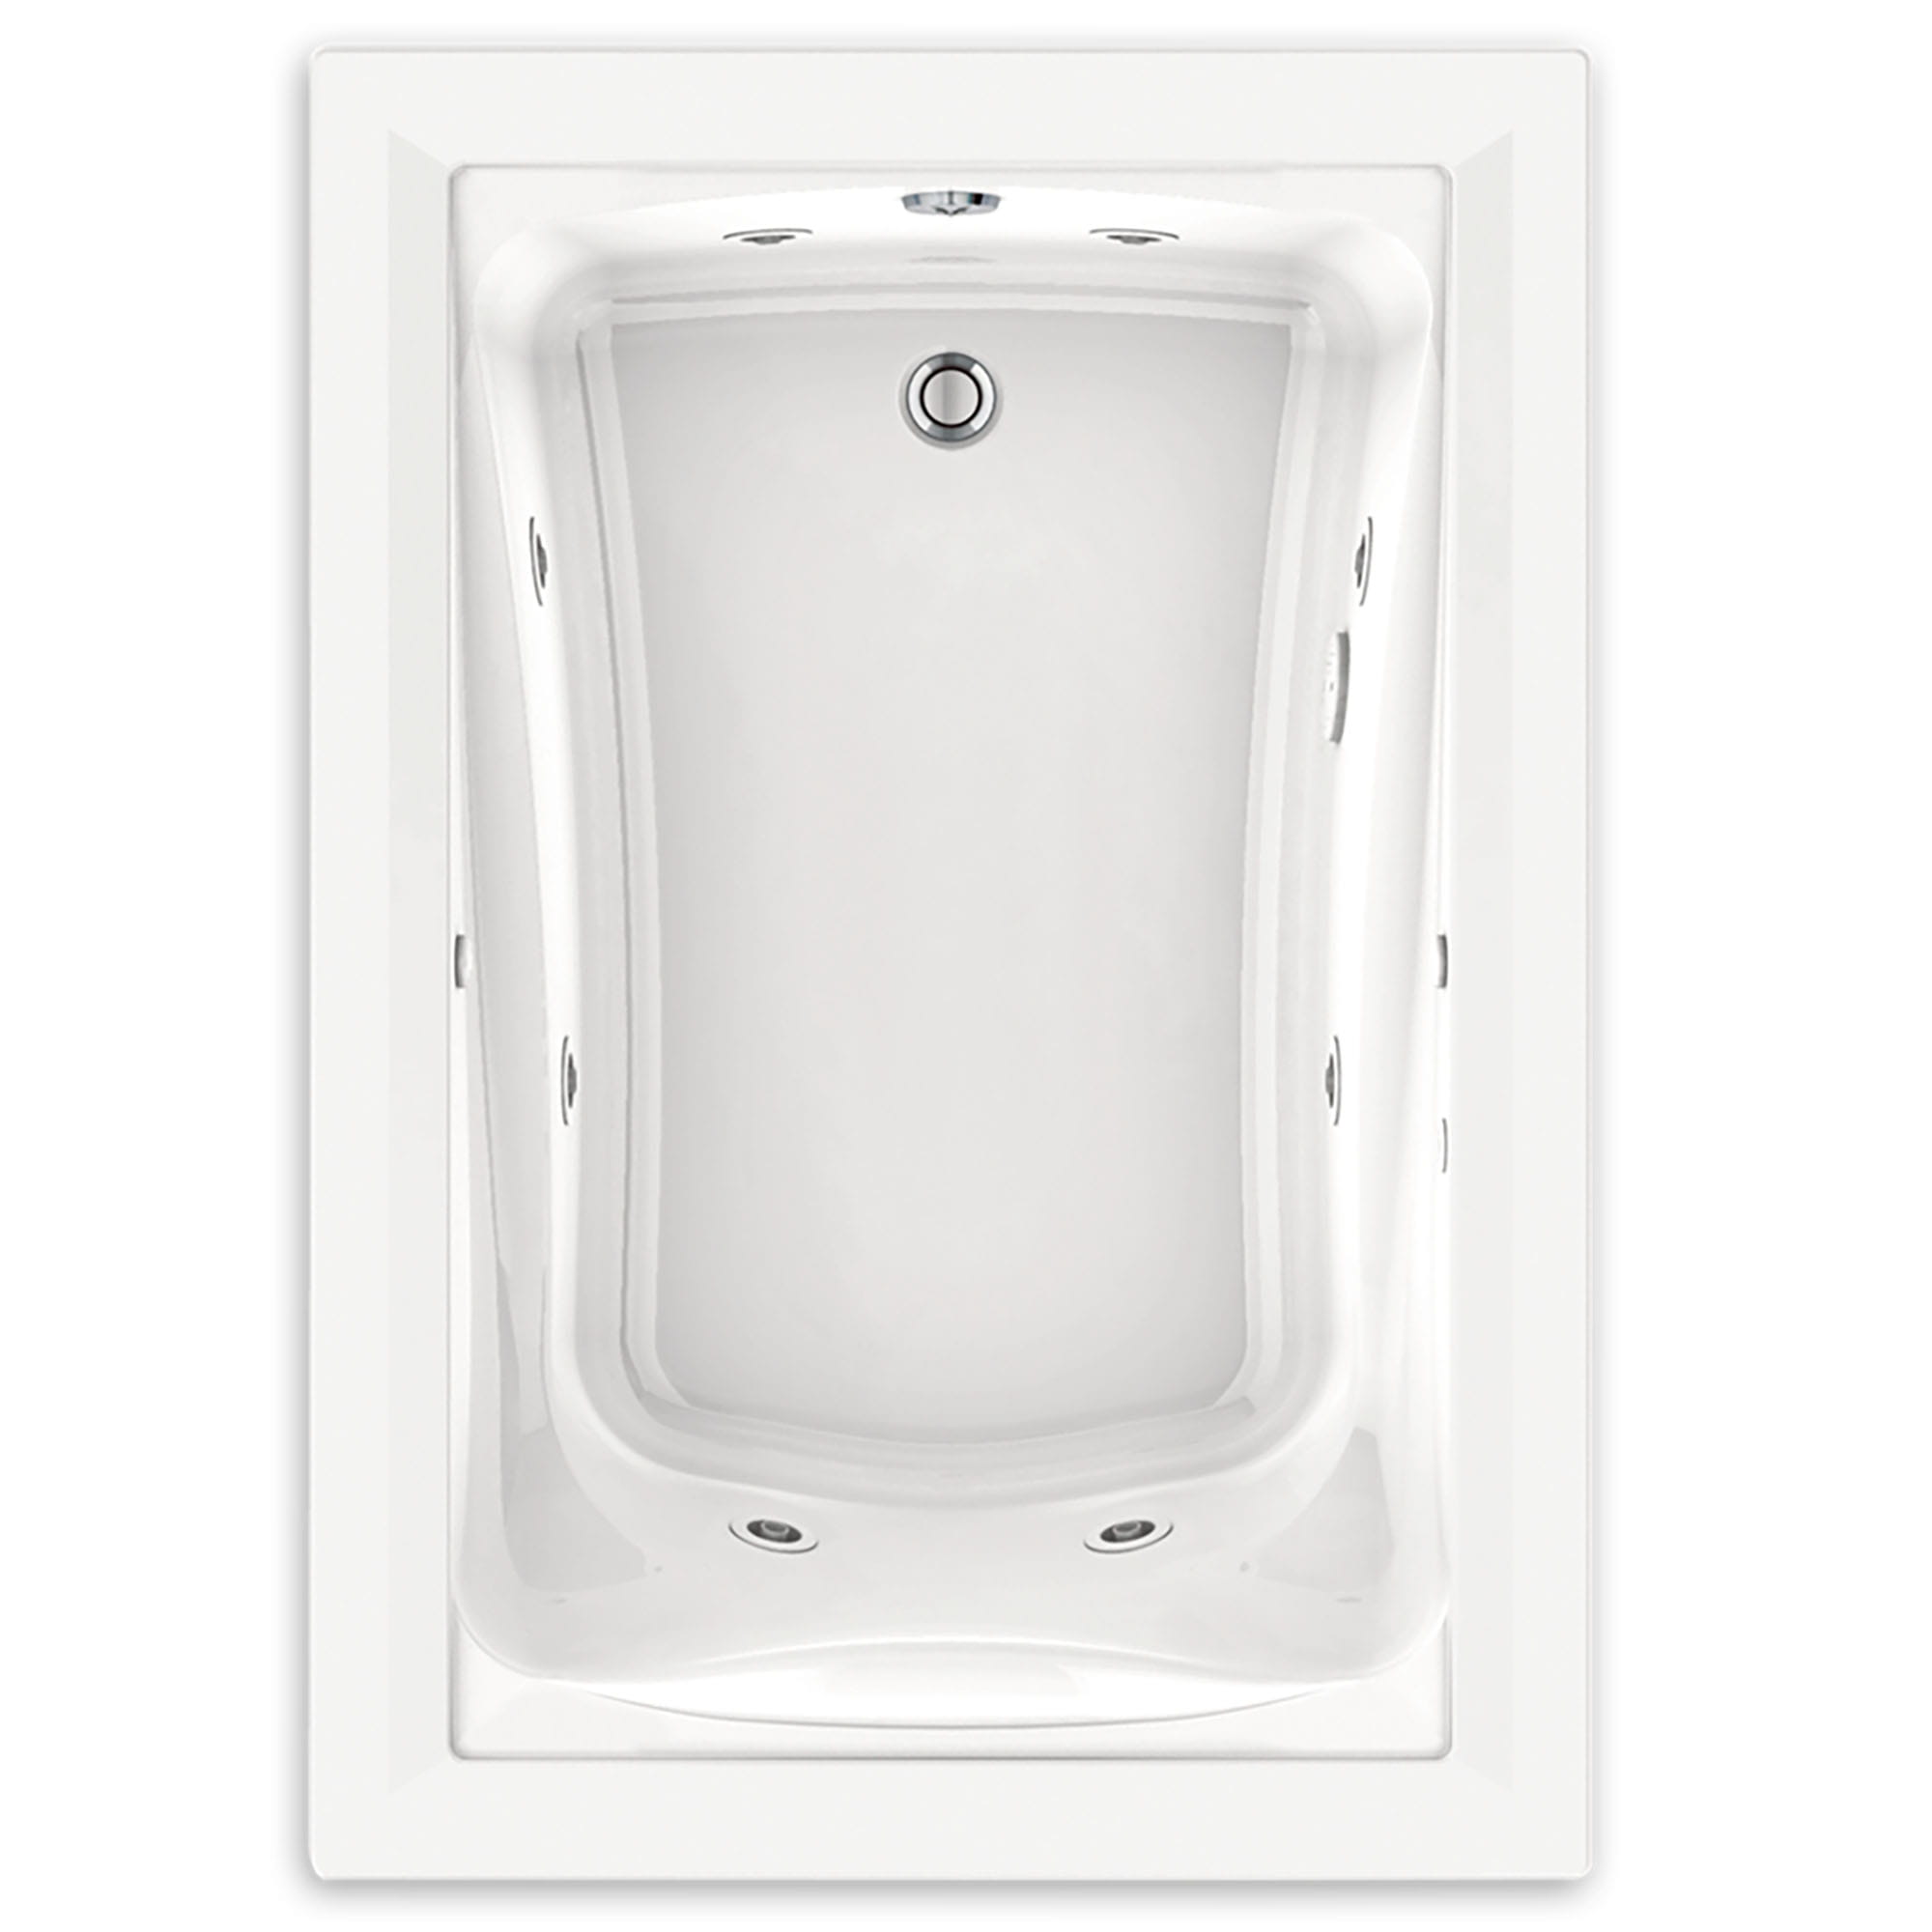 Green Tea® 60 x 42-Inch Drop-In Bathtub With EcoSilent® EverClean® Combination Spa System